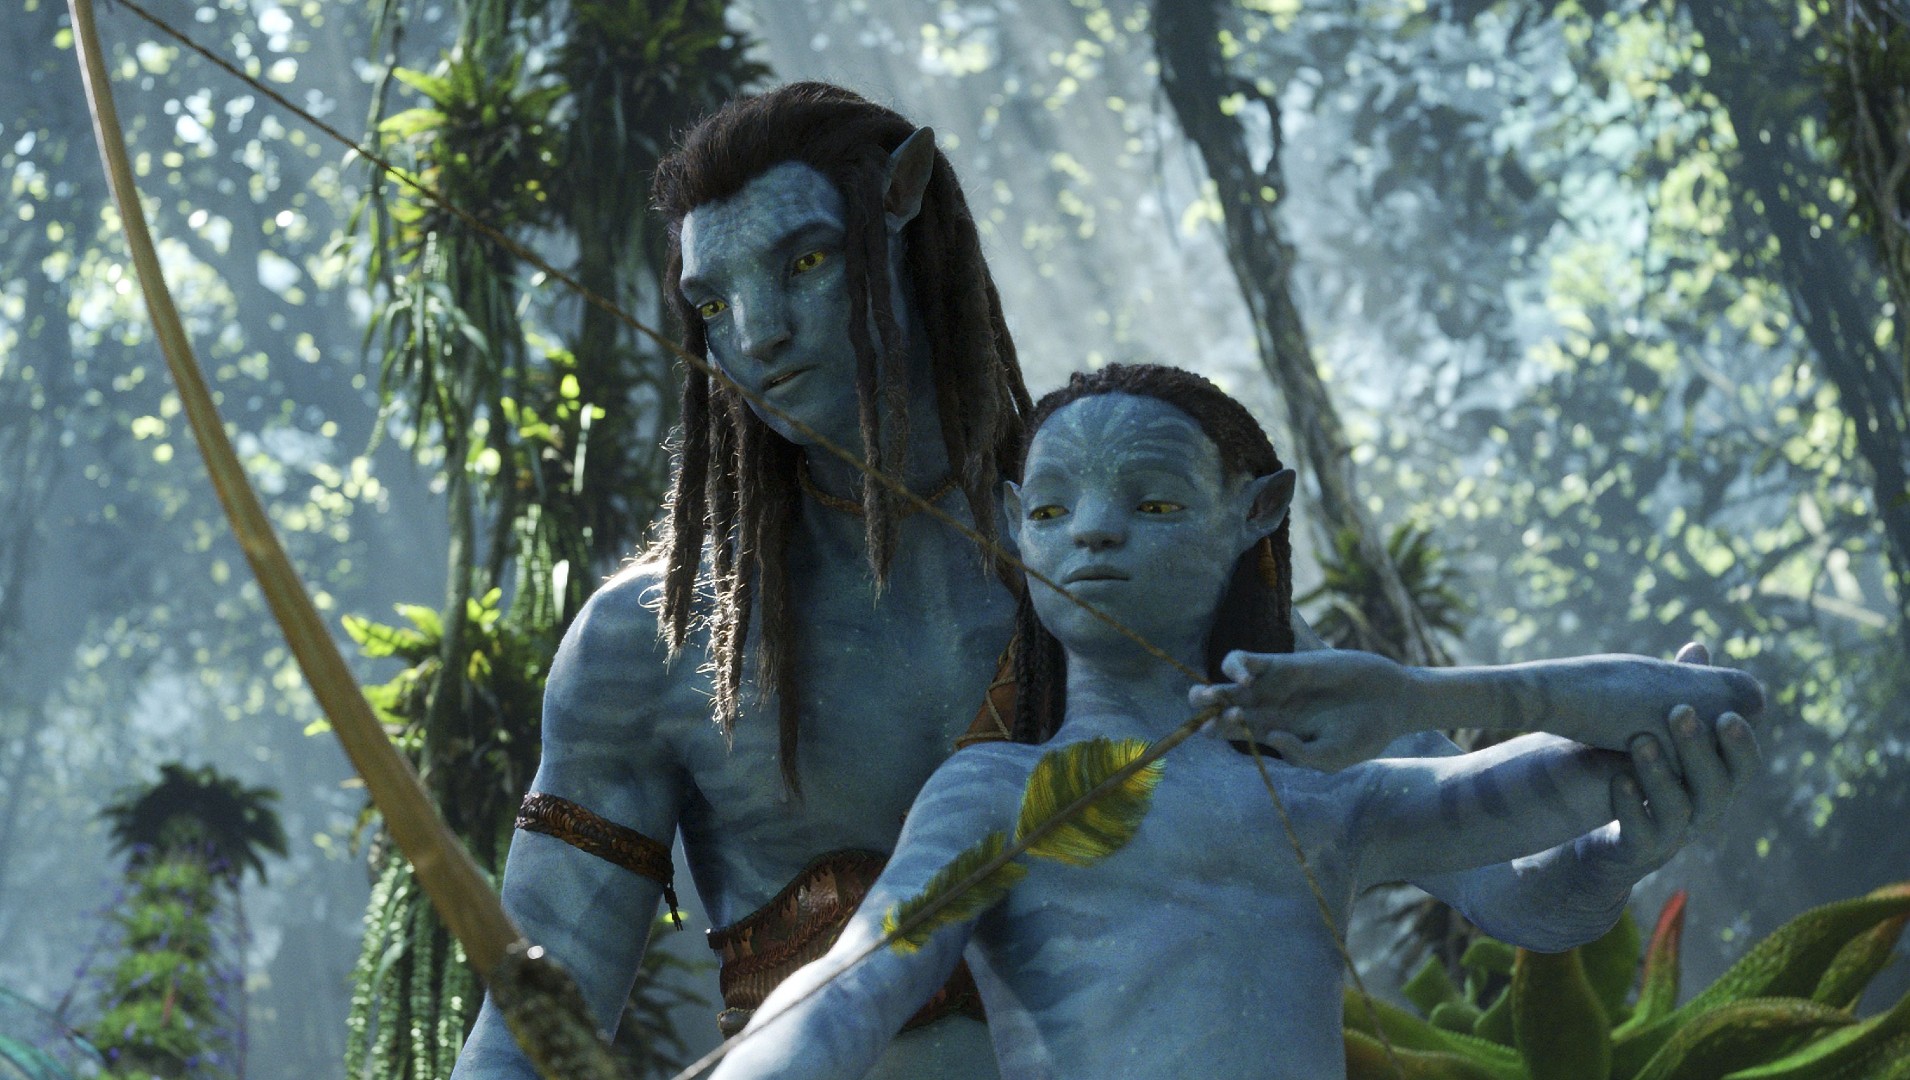 James Cameron Avatar 3